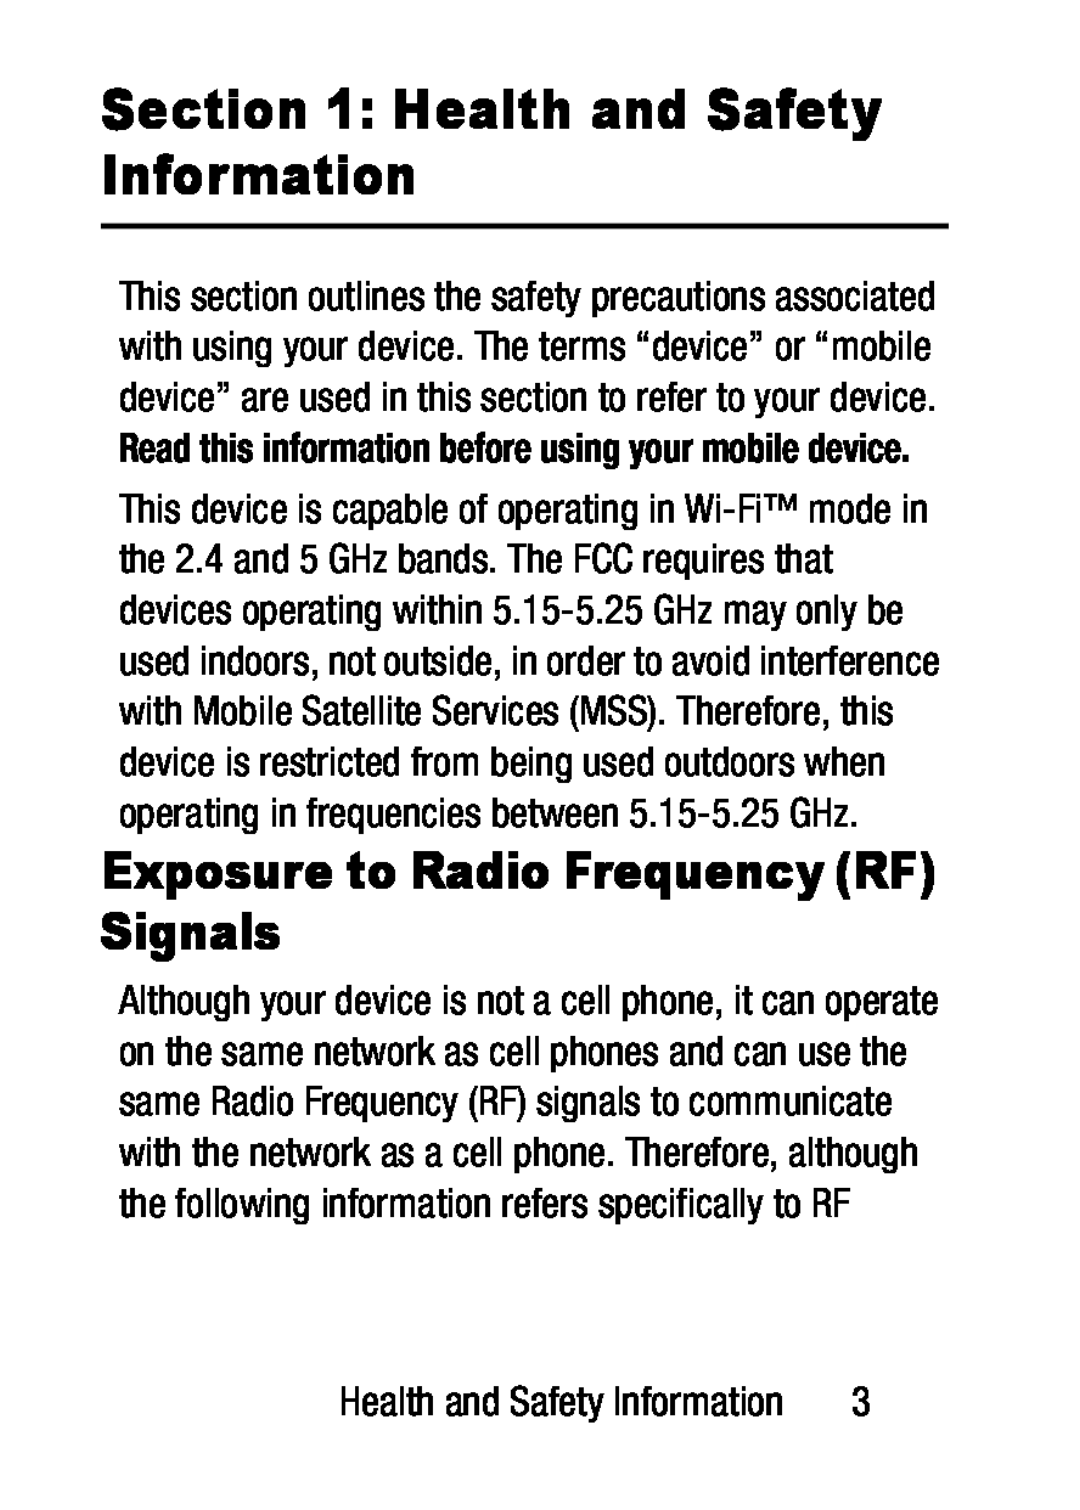 Exposure to Radio Frequency (RF) Signals Galaxy Tab 4 10.1 Verizon